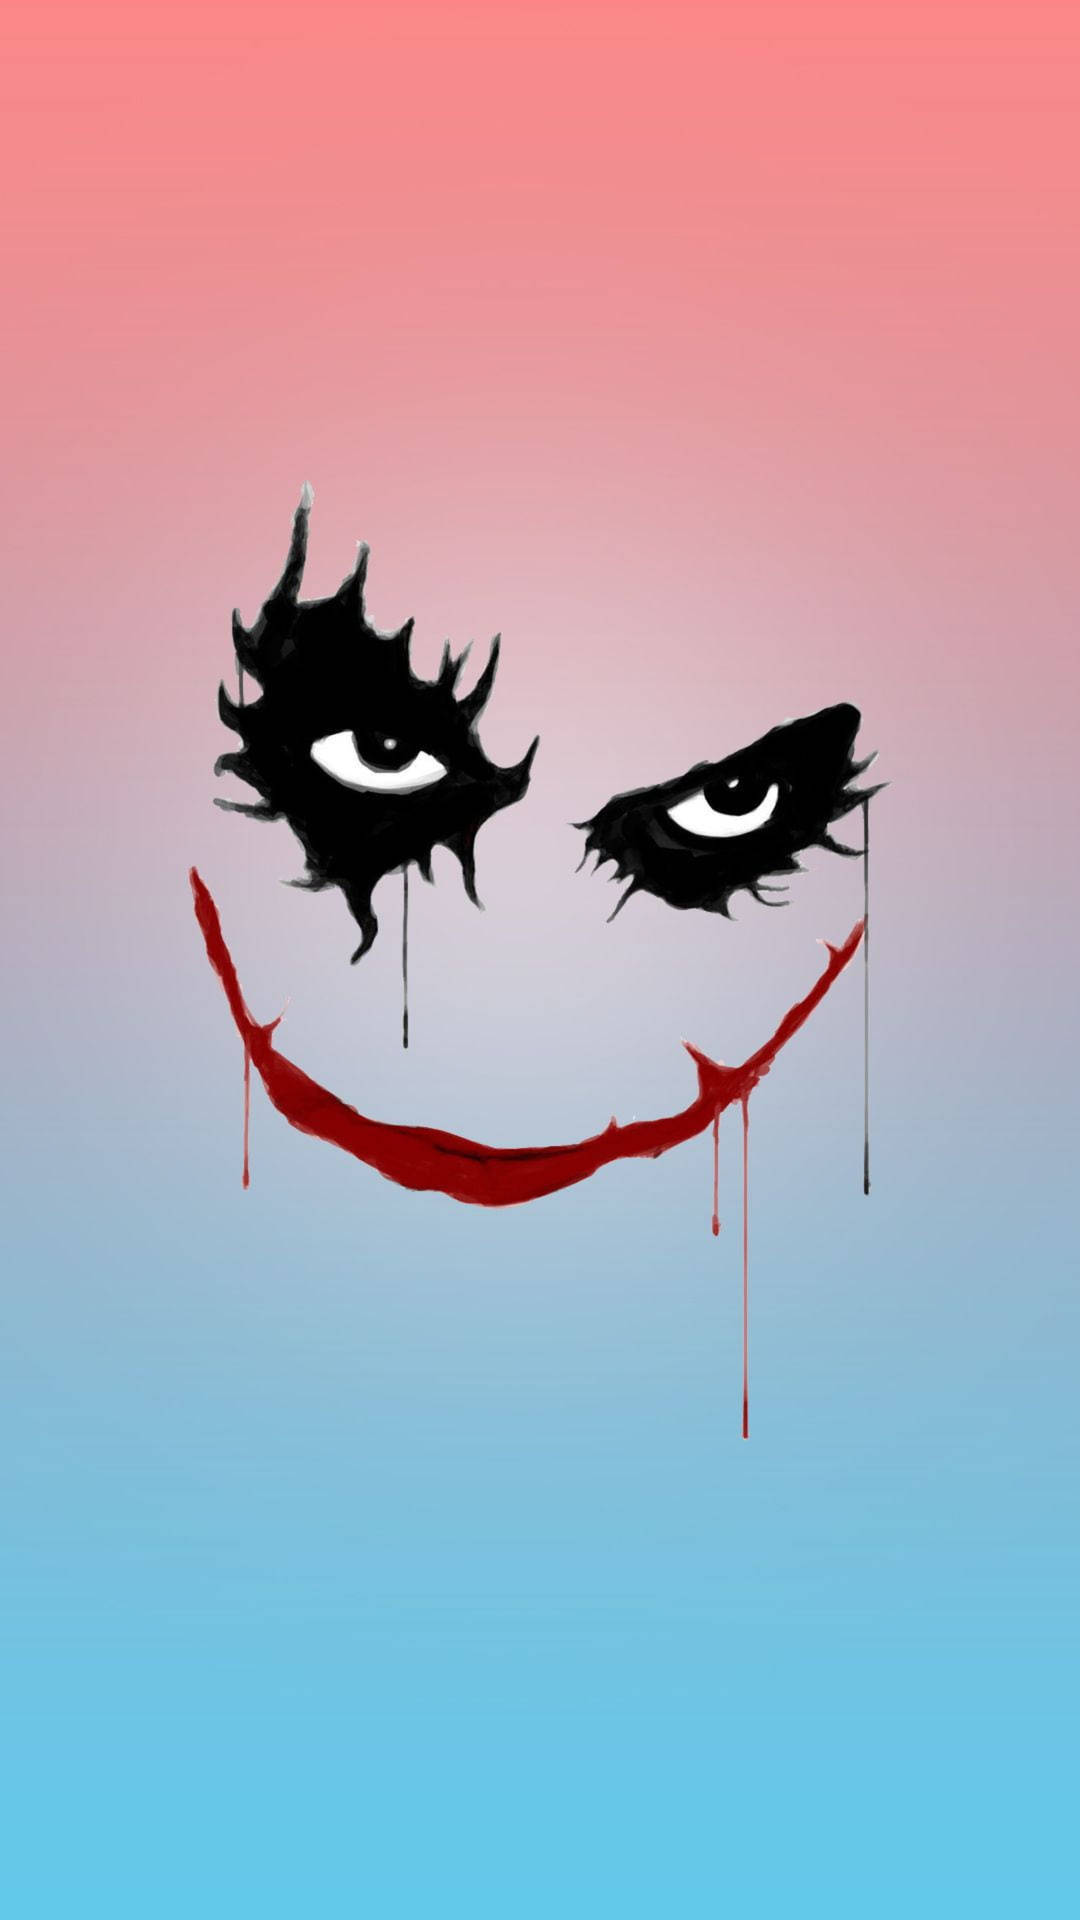 Joker 2880X5120 Wallpaper and Background Image